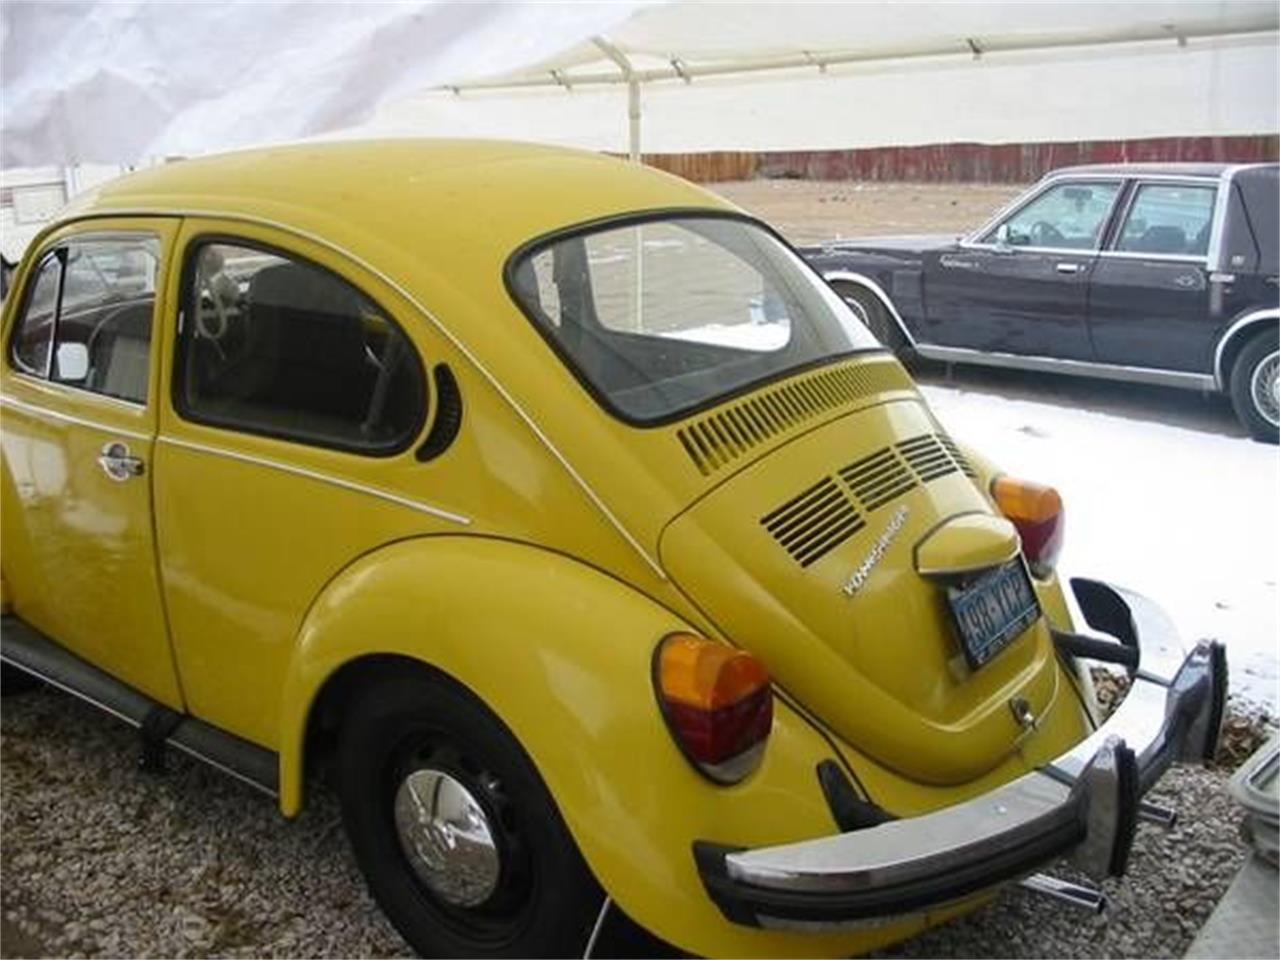 1974 Volkswagen Super Beetle for sale in Cadillac, MI